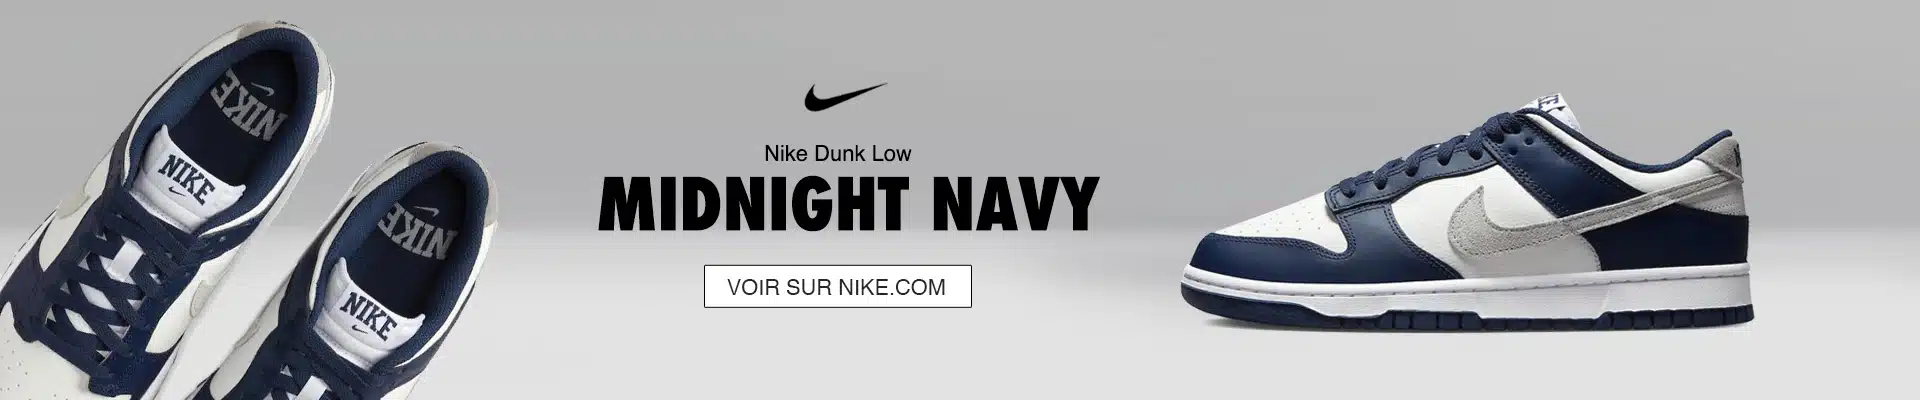 Nike Dunk Low Midnight Navy